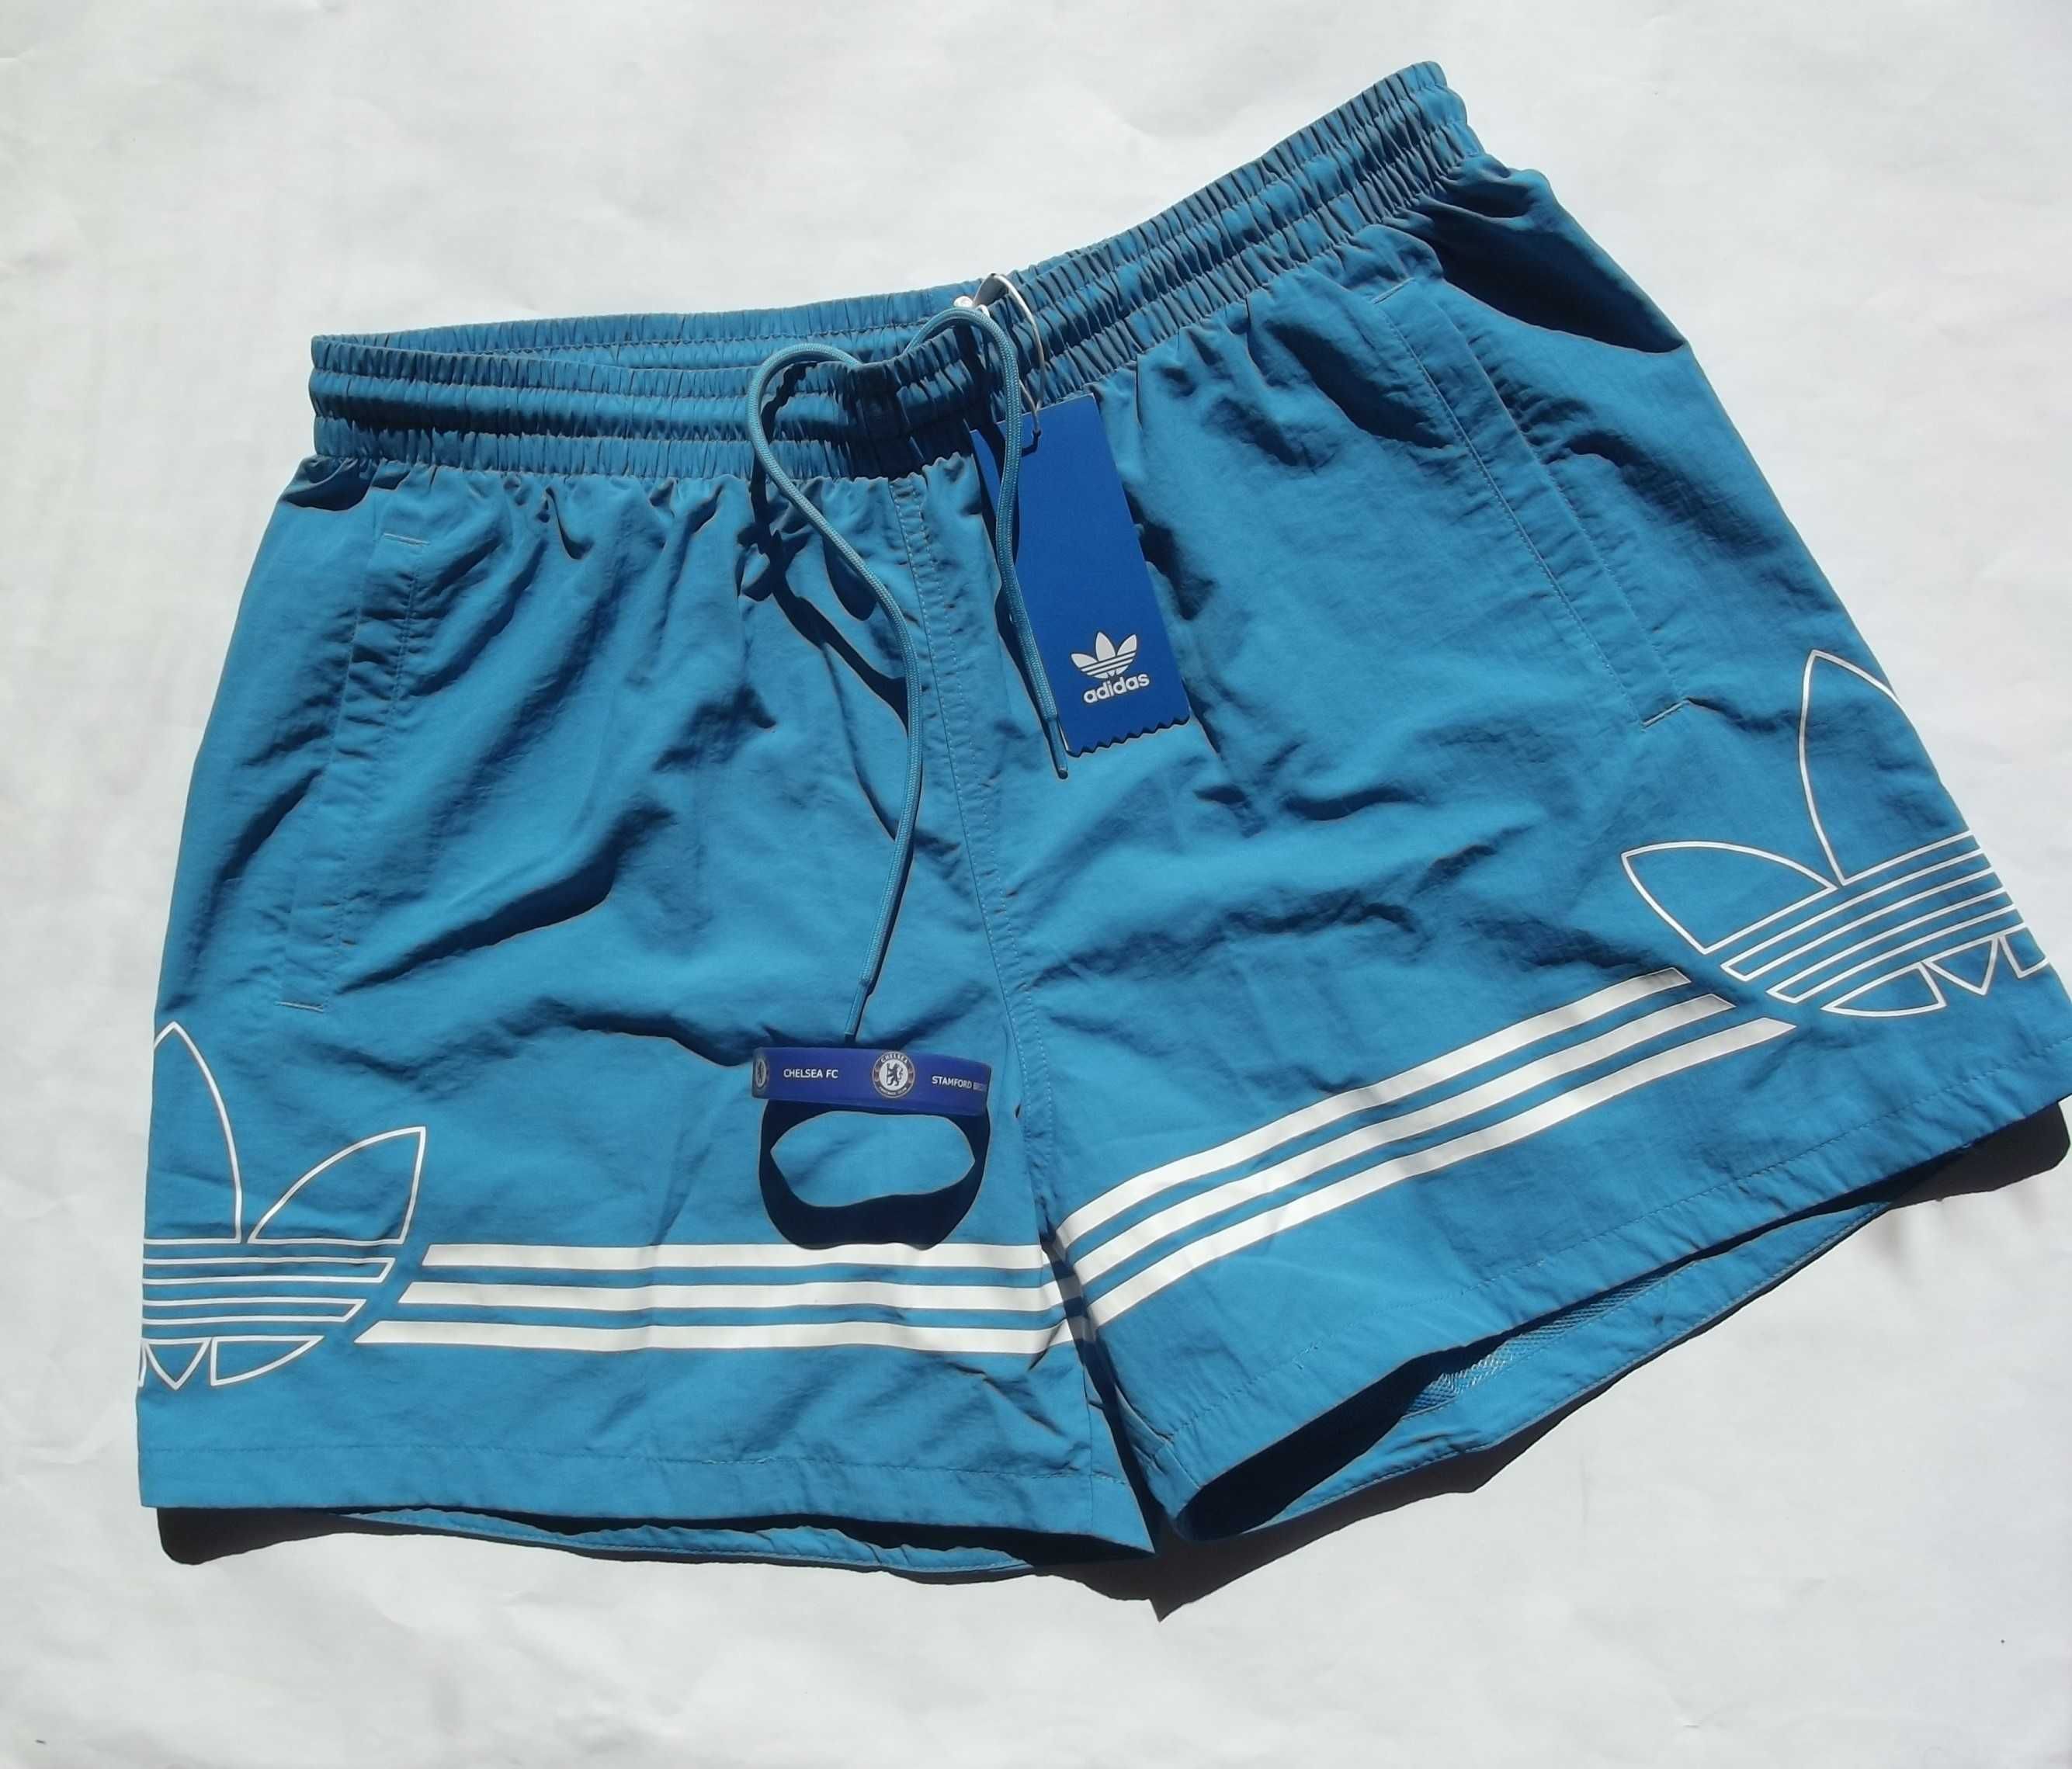 Adidas Originals szorty - spodenki kąpielowe + FC Chelsea opaska